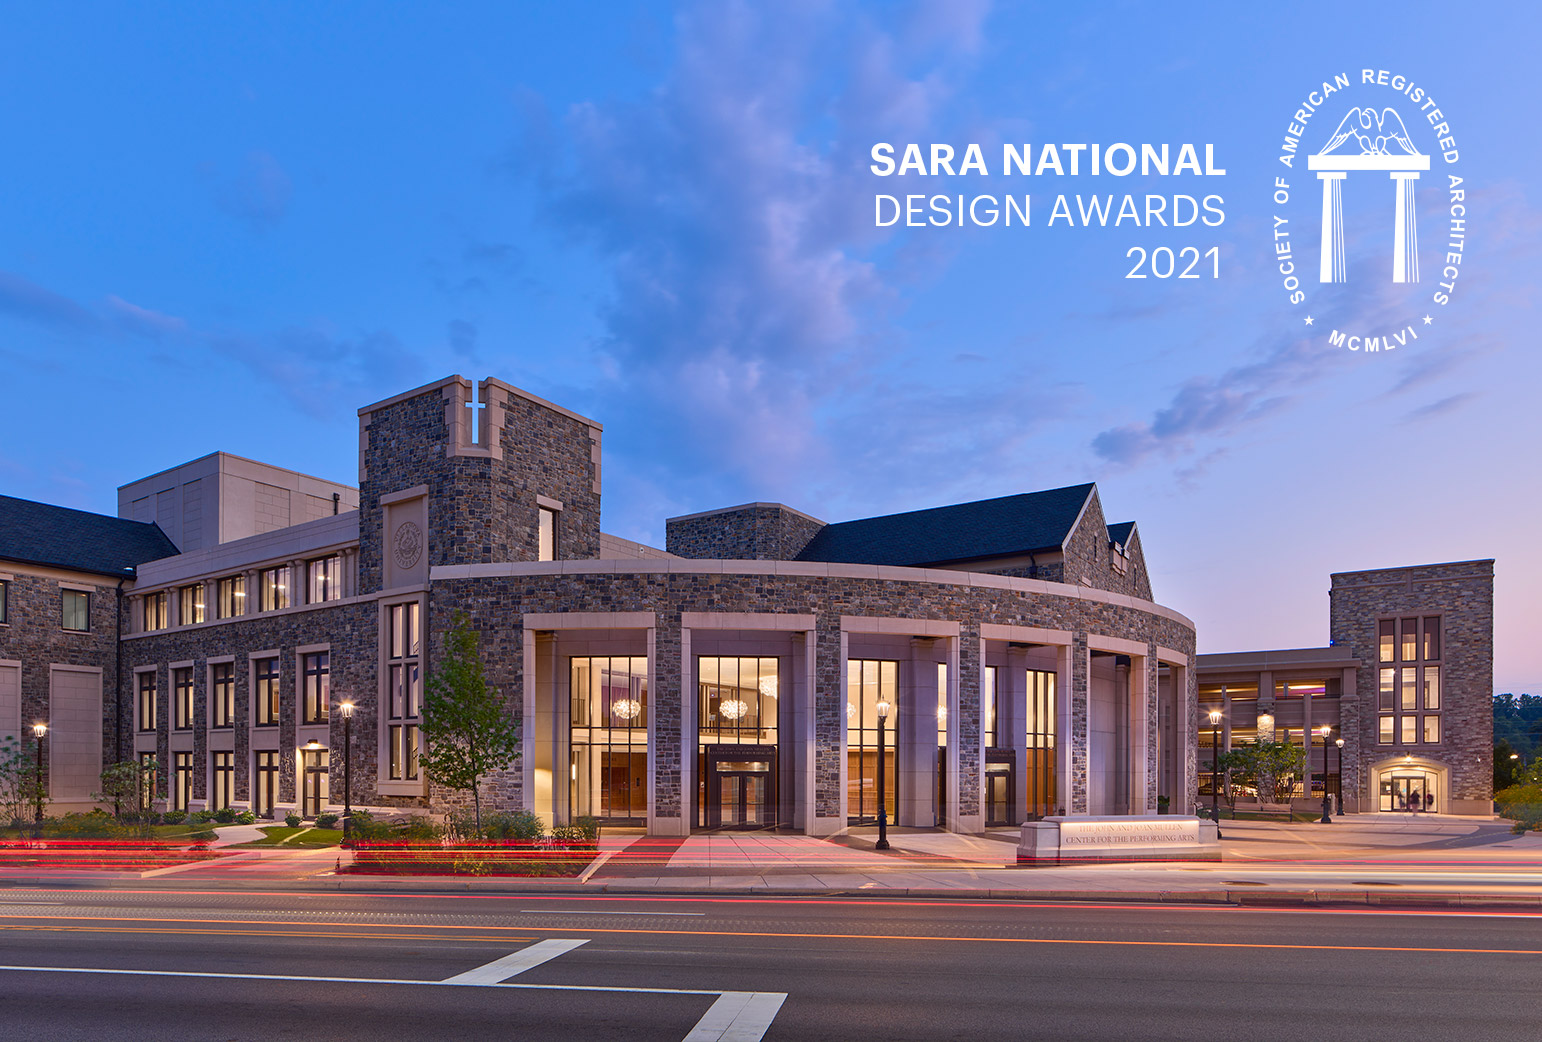 Villanova's New Performing Arts Center Wins 2021 National Design Award